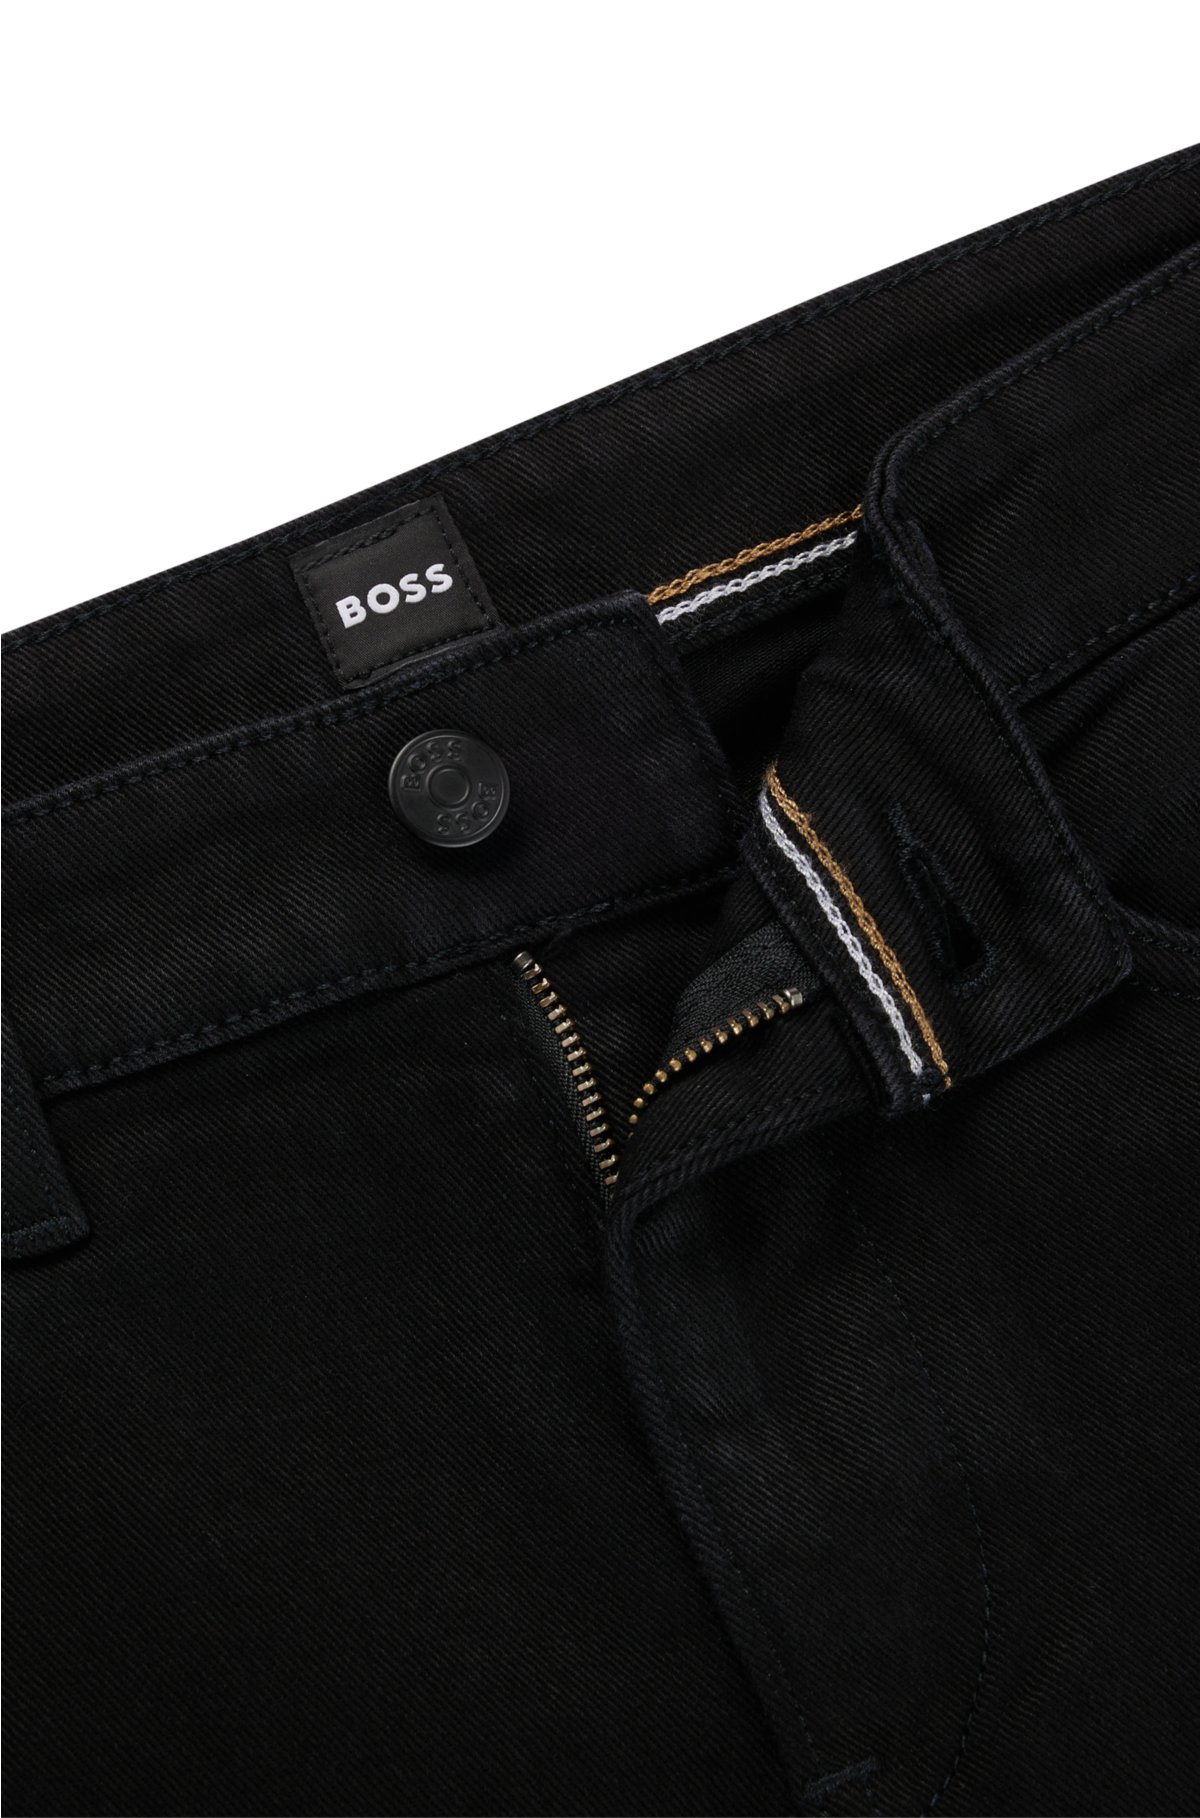 BOSS - Slim-fit jeans in black super-soft Italian denim